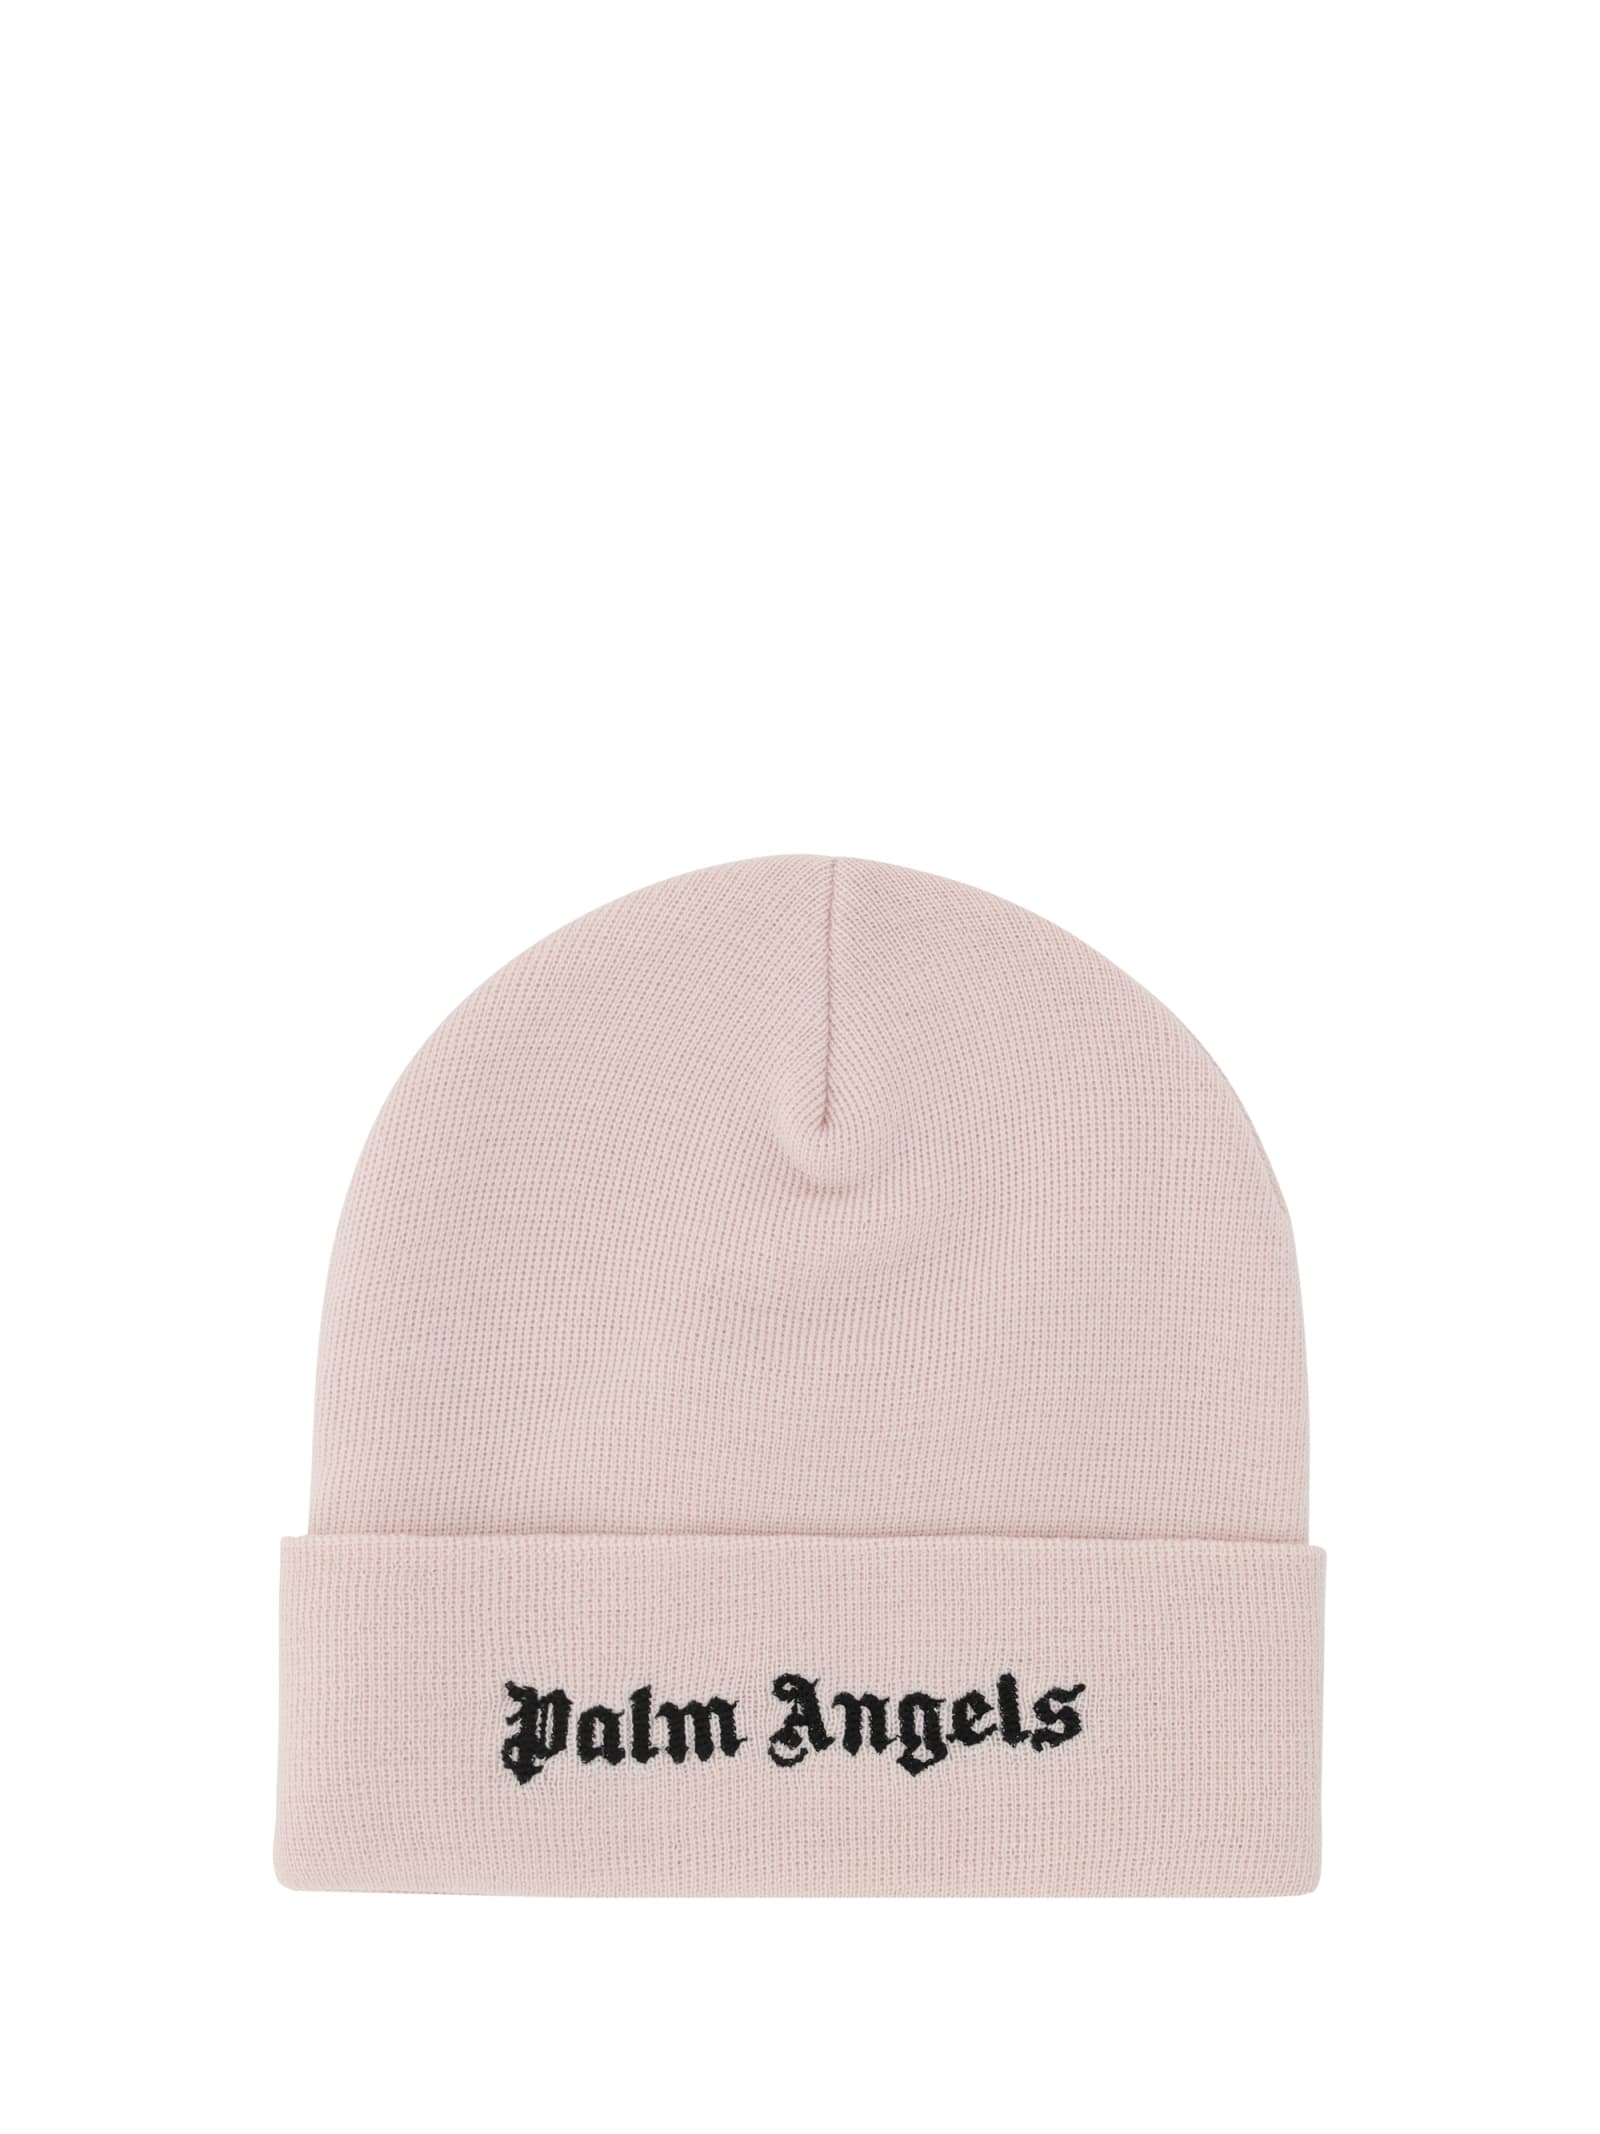 Palm Angels Beanie Hat